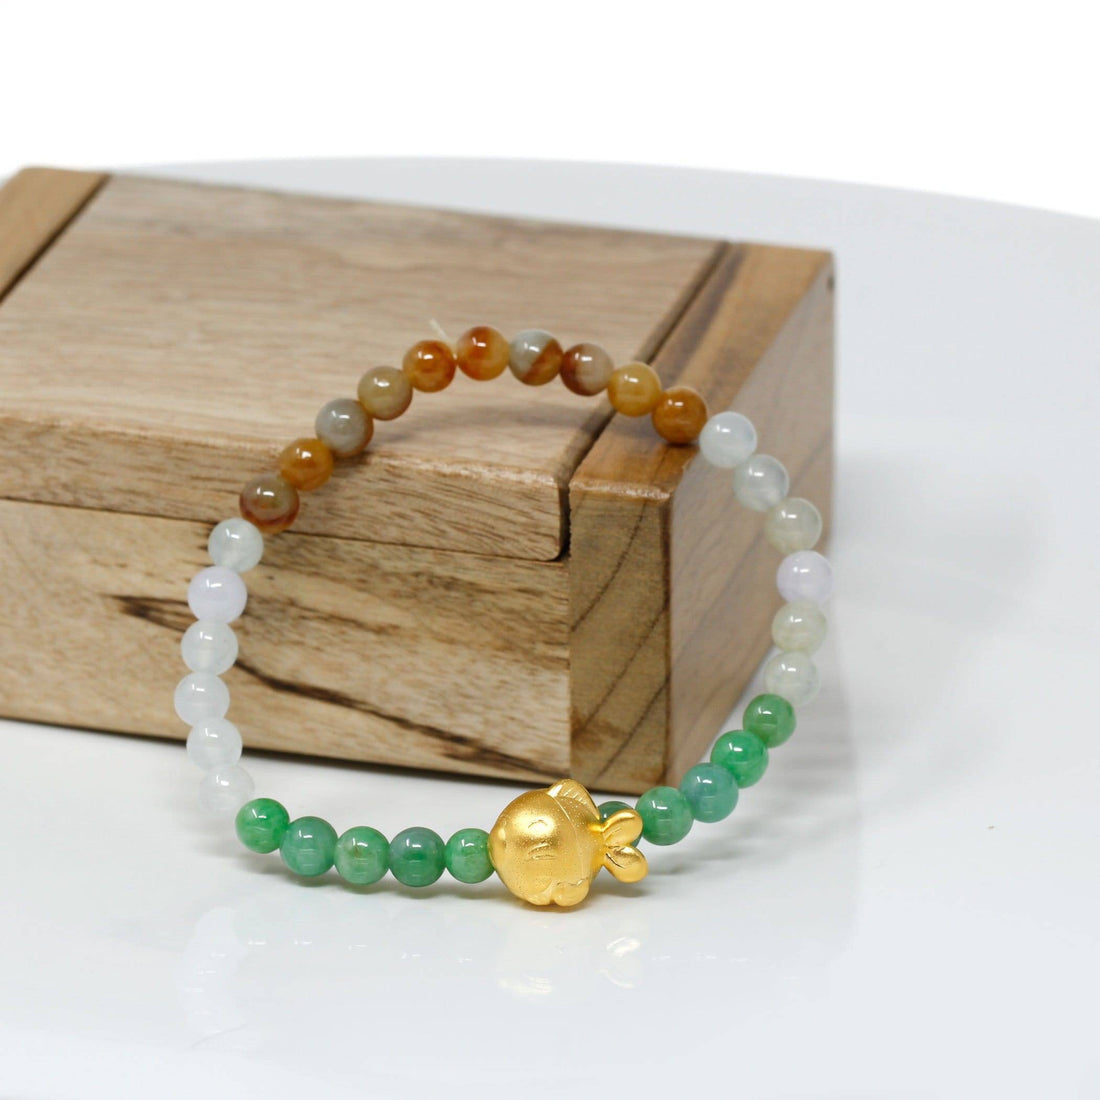 Baikalla Jewelry 24k Gold Jadeite Beads Bracelet XS 6 Inches Genuine High-quality Jade Jadeite Bracelet Bangle with 24k Yellow Goldfish Charm Colorful  #405